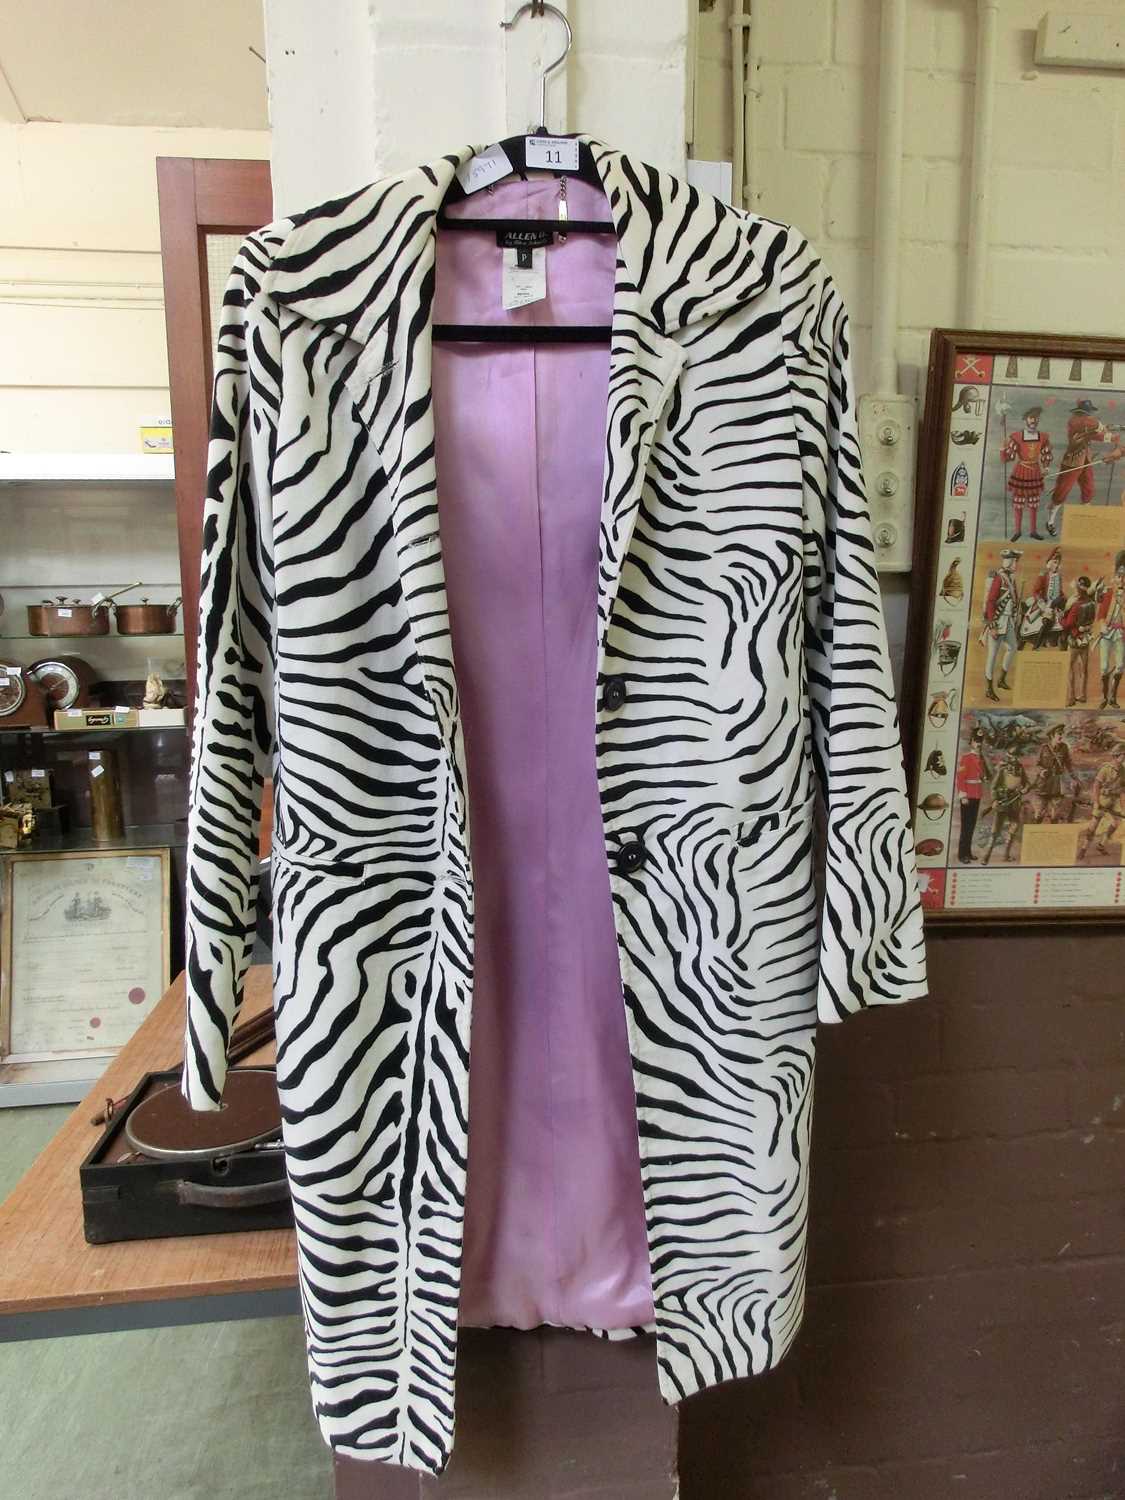 A lady's tiger print jacket by Allen B